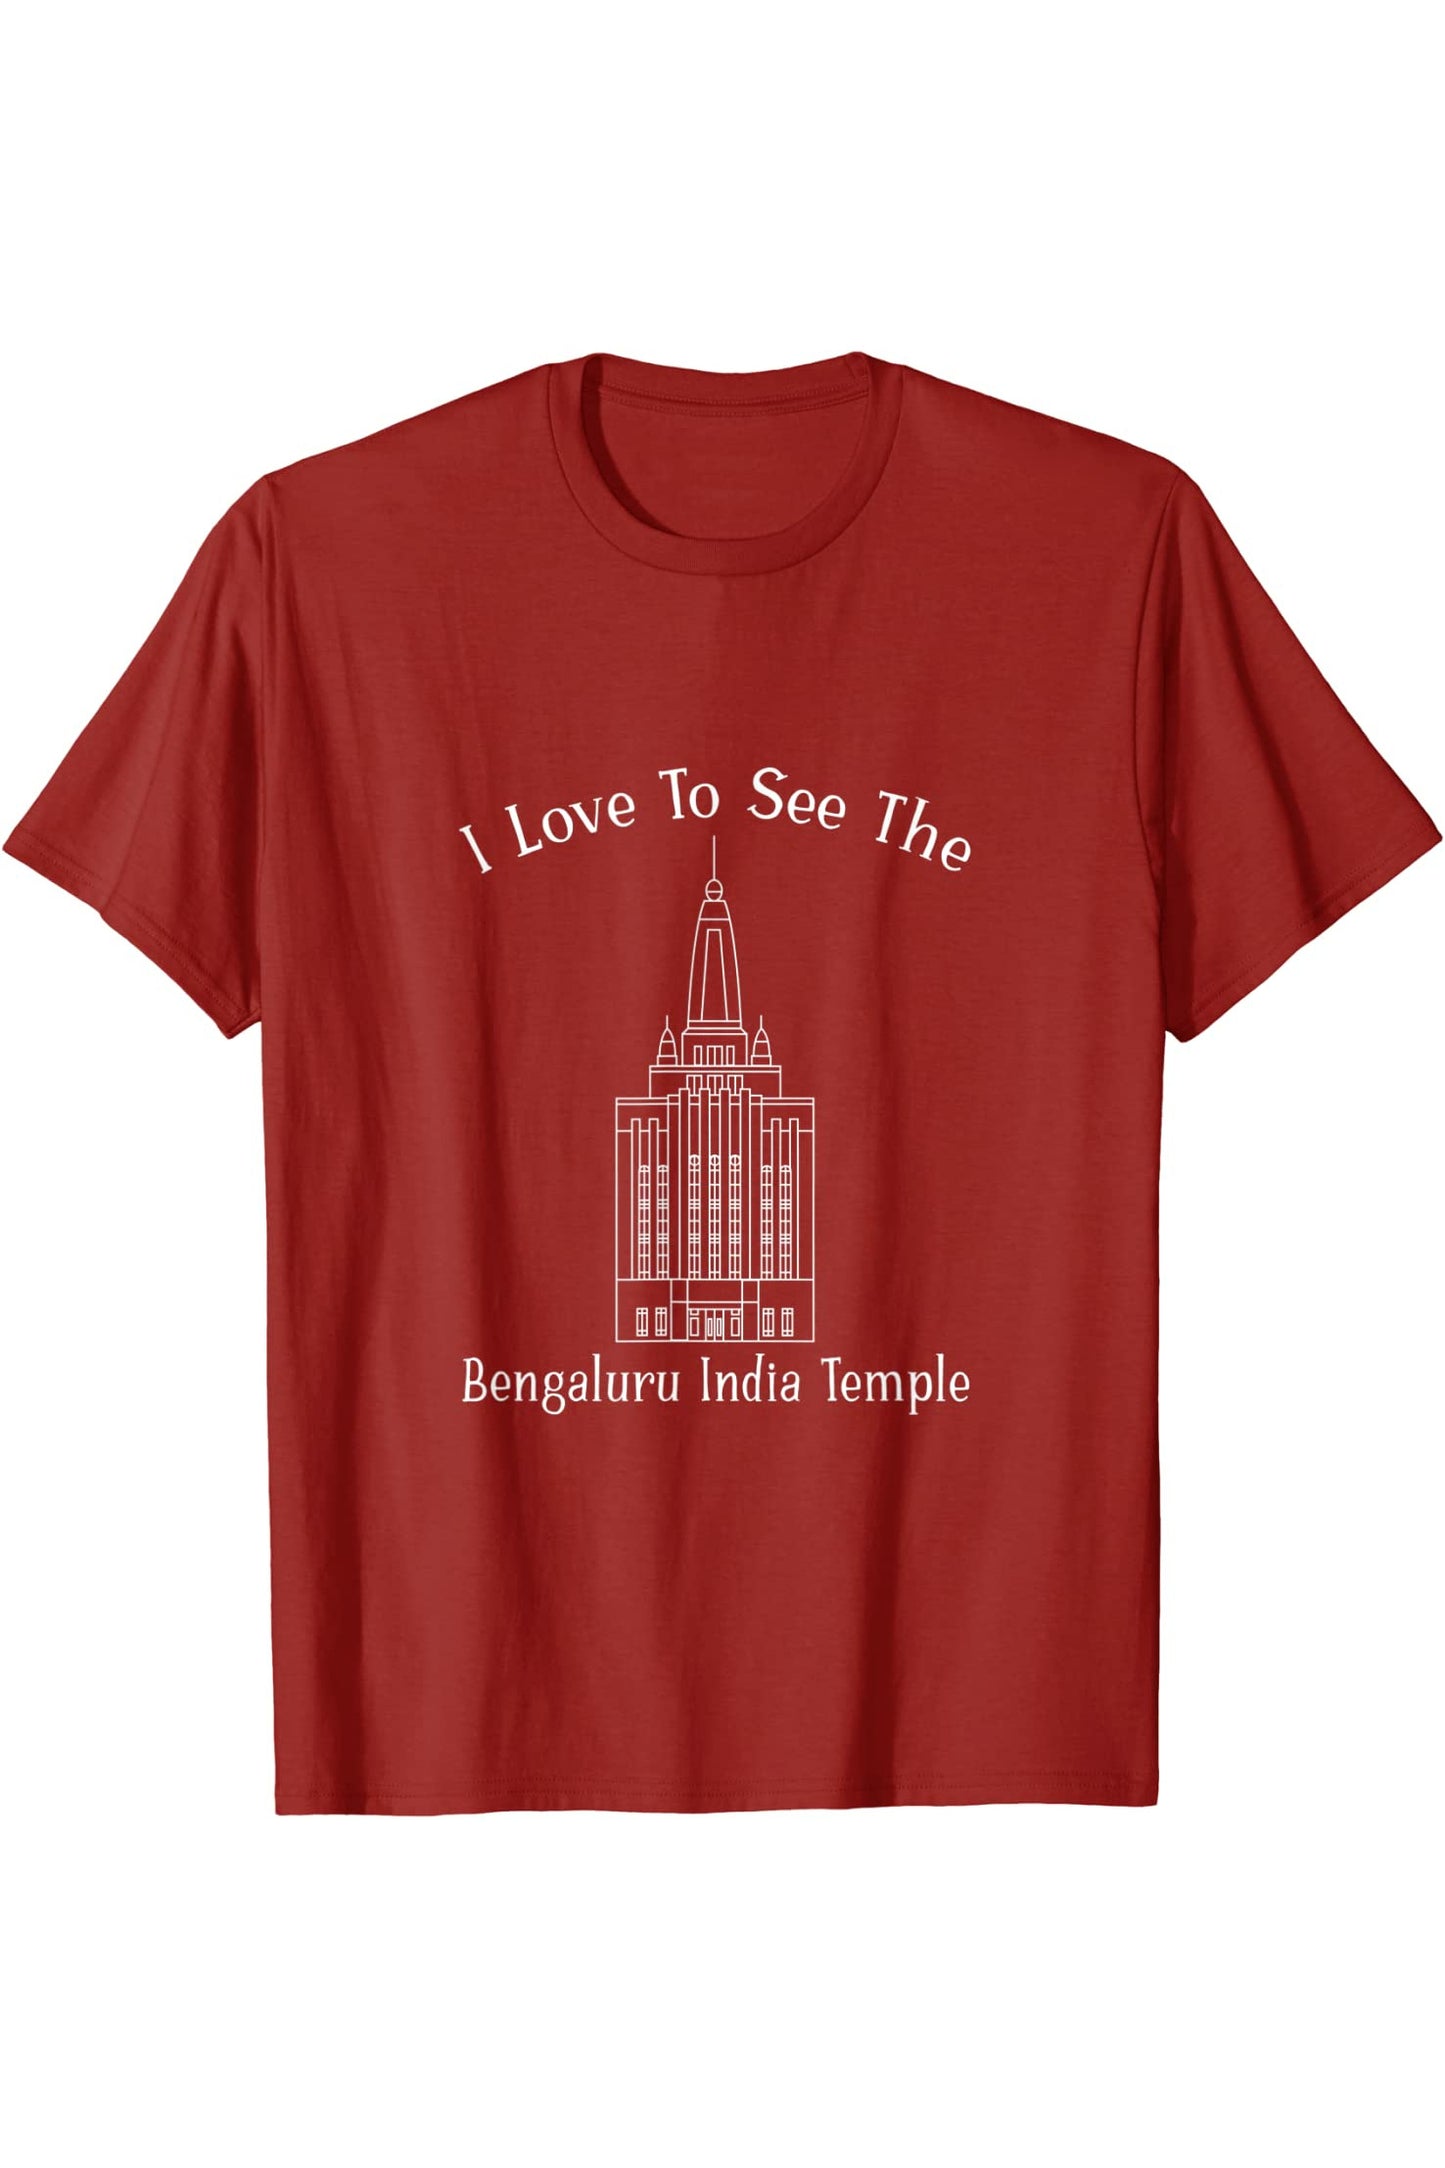 Bengaluru India Temple T-Shirt - Happy Style (English) US